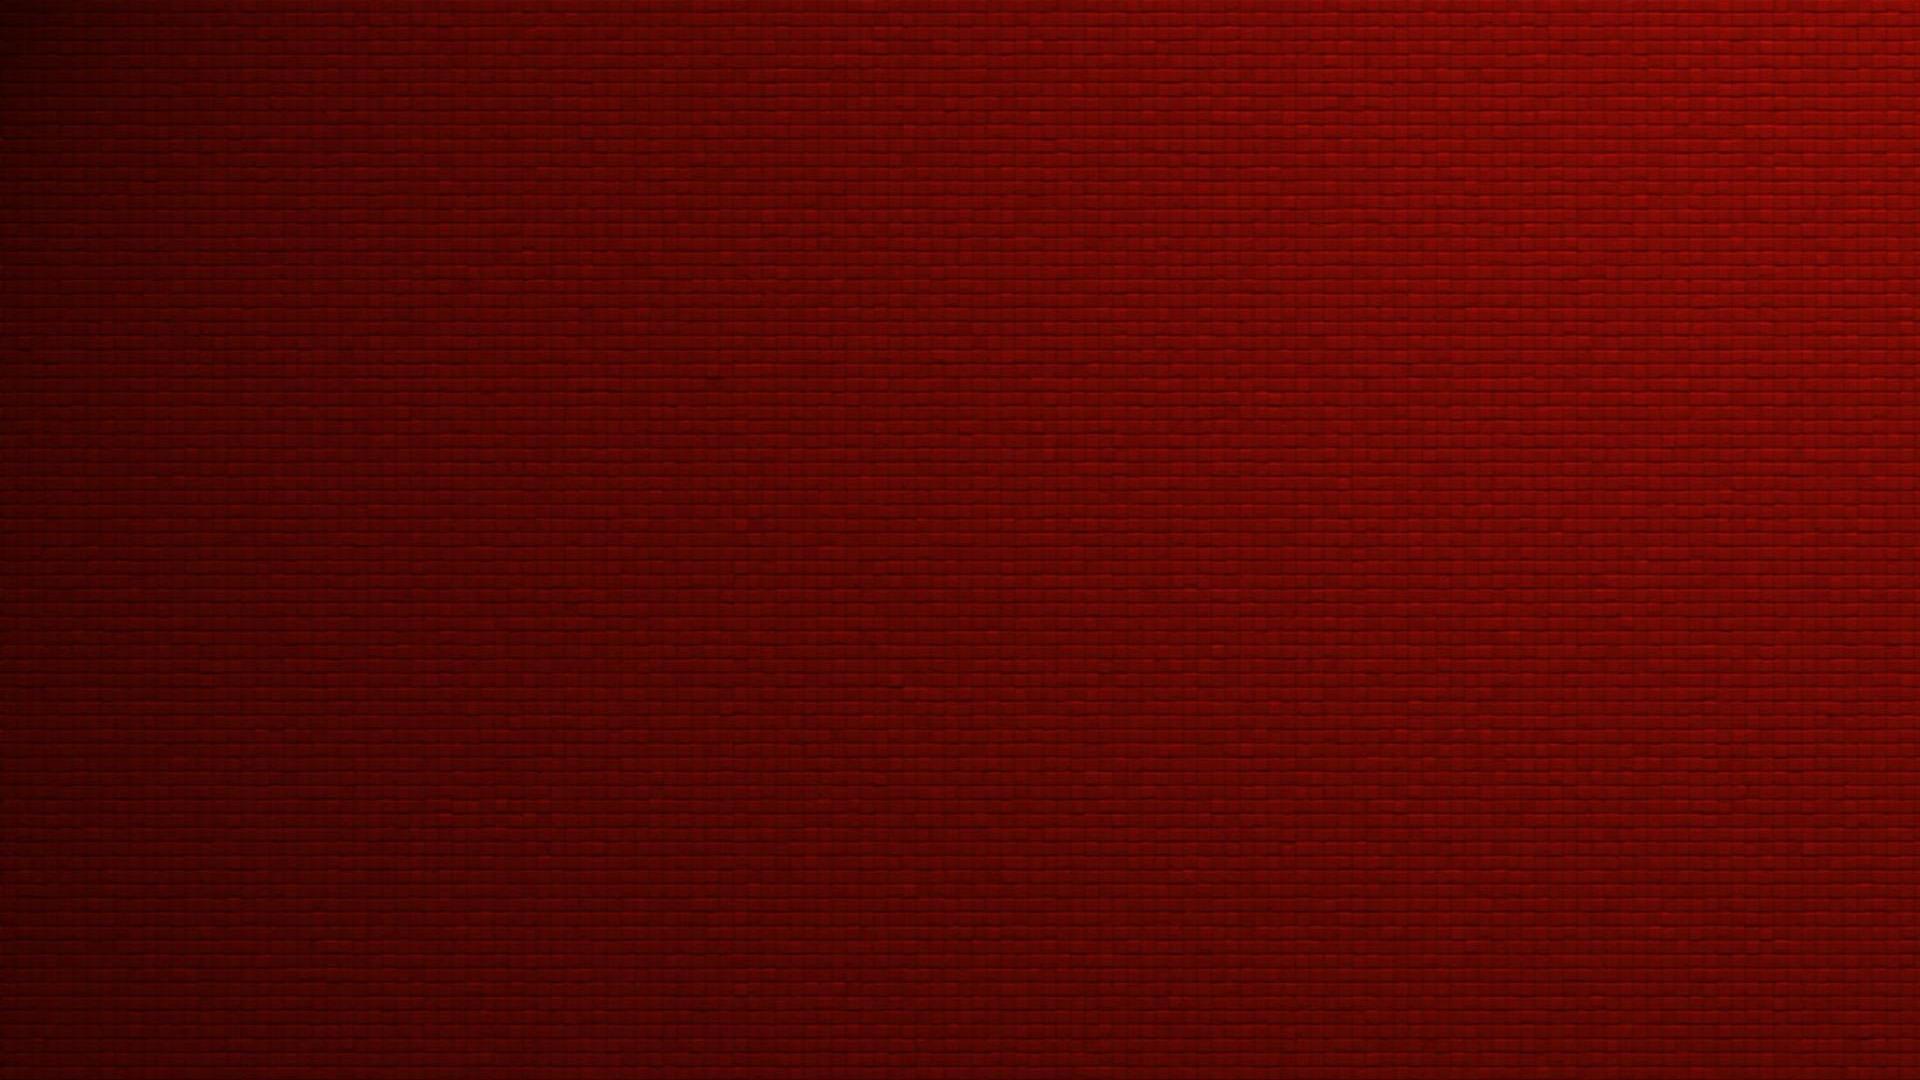 1920x1080 Red Desktop Wallpaper Abstract Red Wallpaper 1920x1080